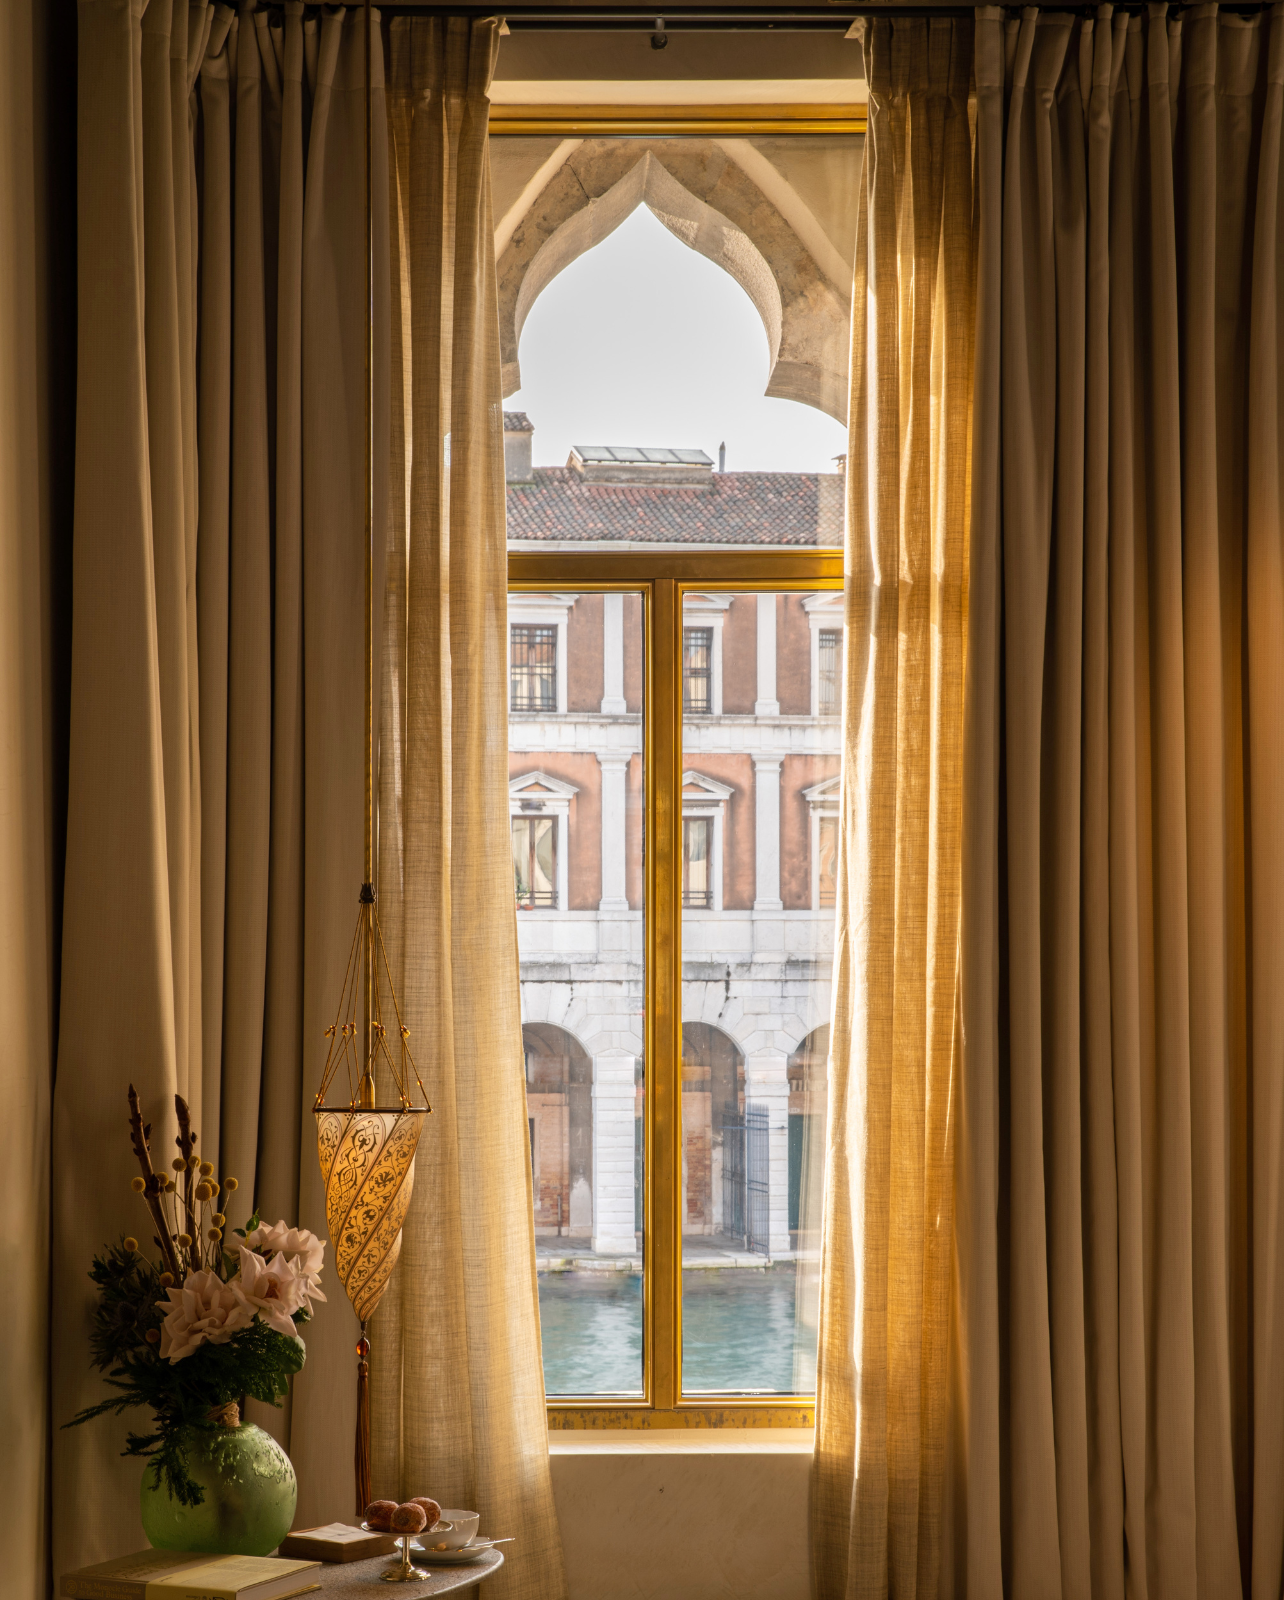 Interior of room at the Venice Venice Hotel inside the Ca’da Mosto palace